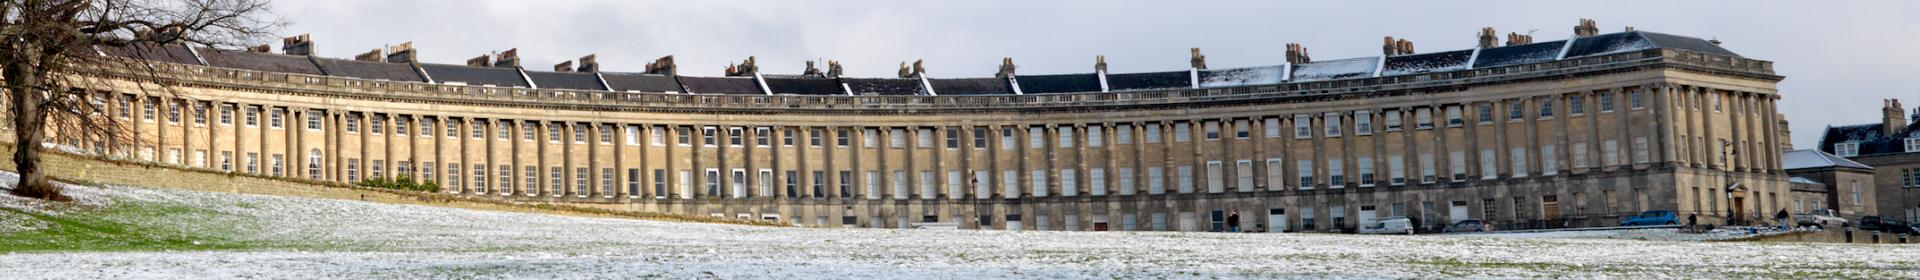 Royal Crescent in Winter, Visit Bath